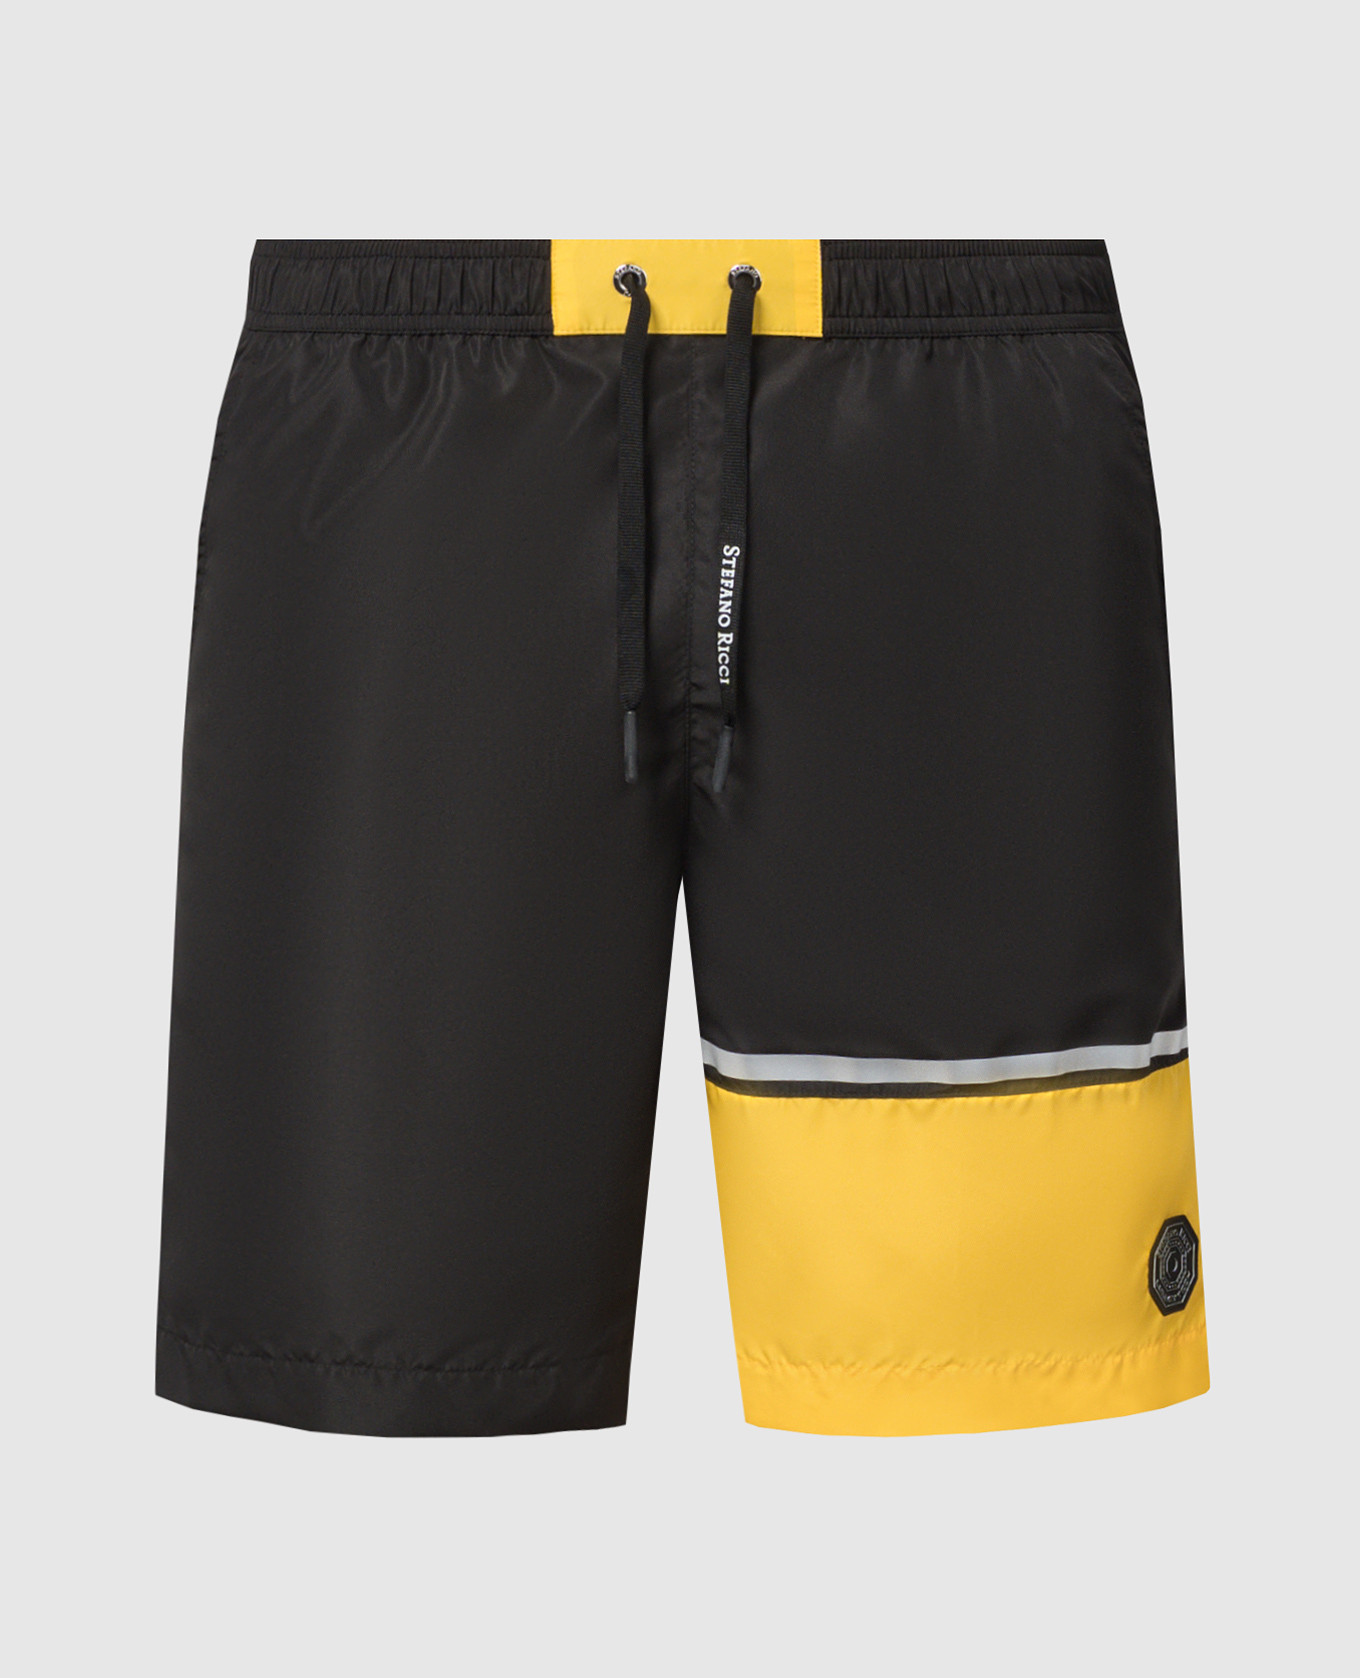 Black logo swim shorts